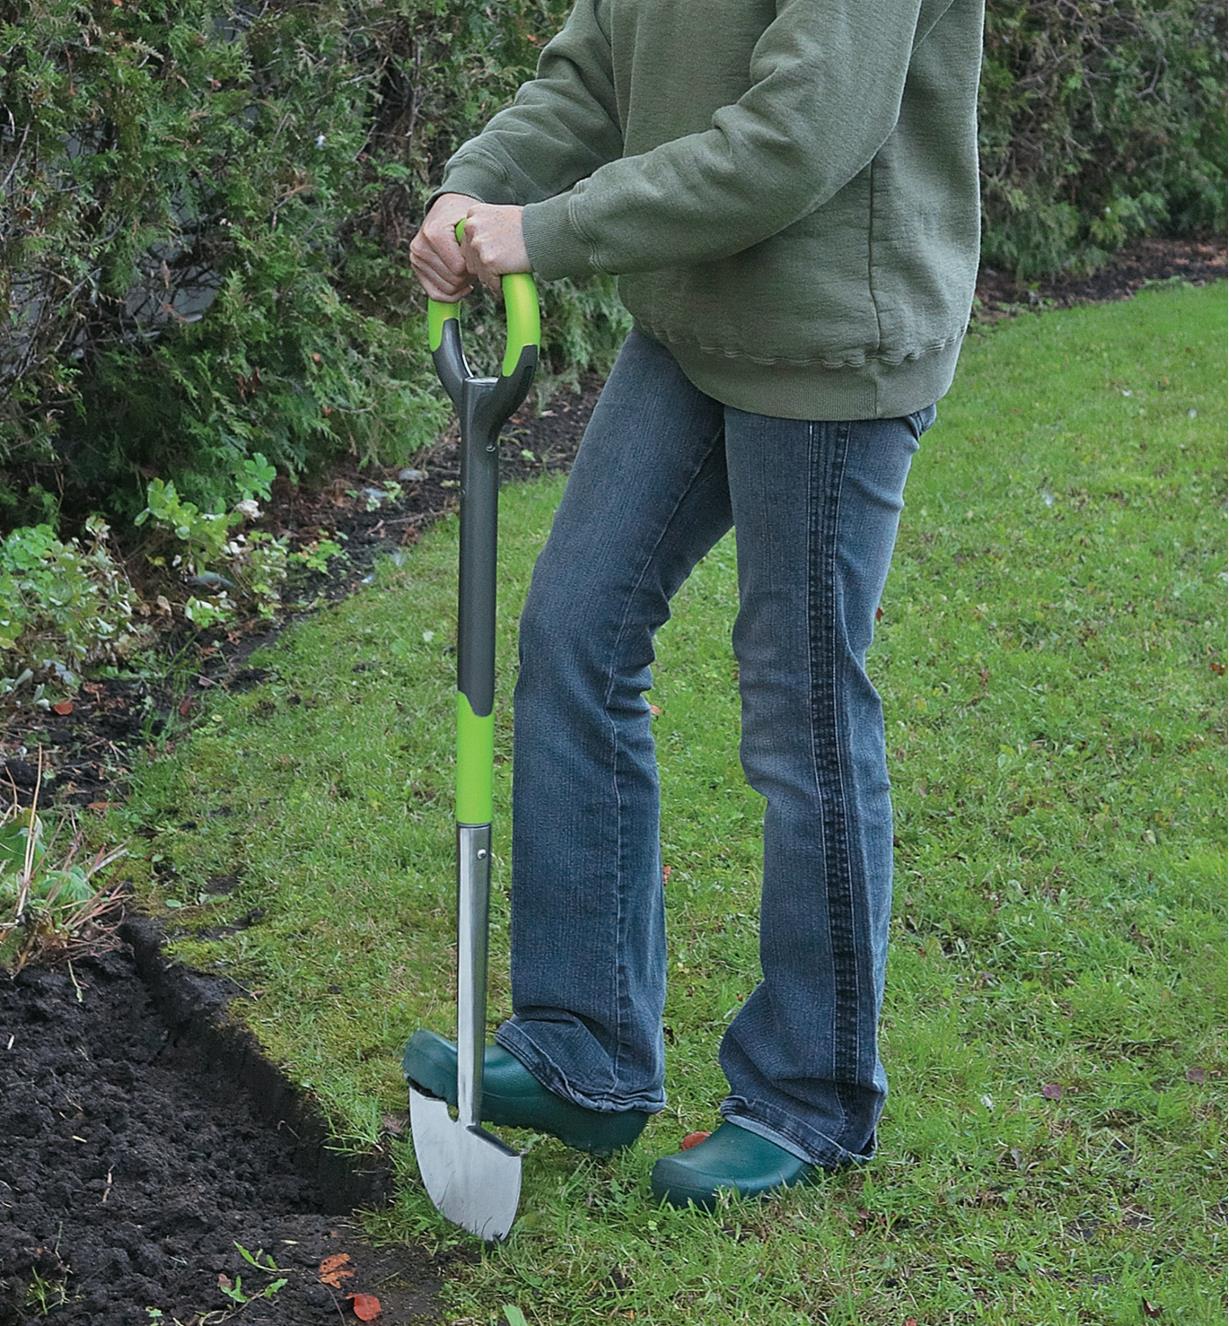 A woman cuts the edge of a garden using the Radius ergonomic edger